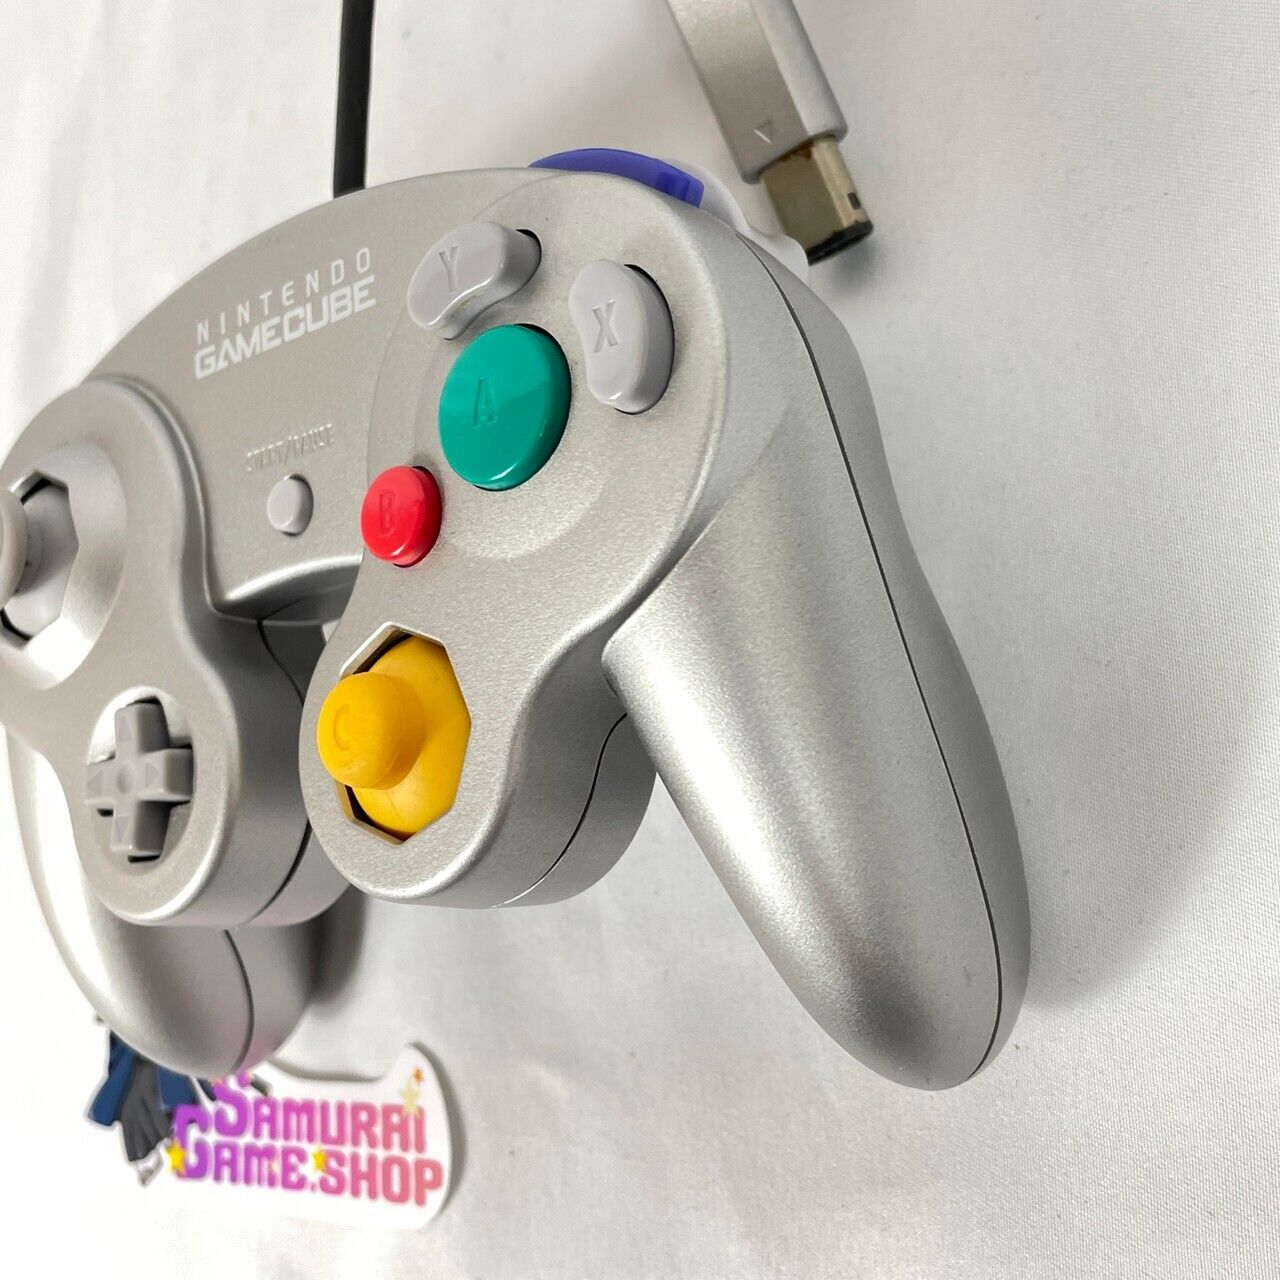 Nintendo Official GameCube Controller Various Choose Colors JAPAN Edition GC